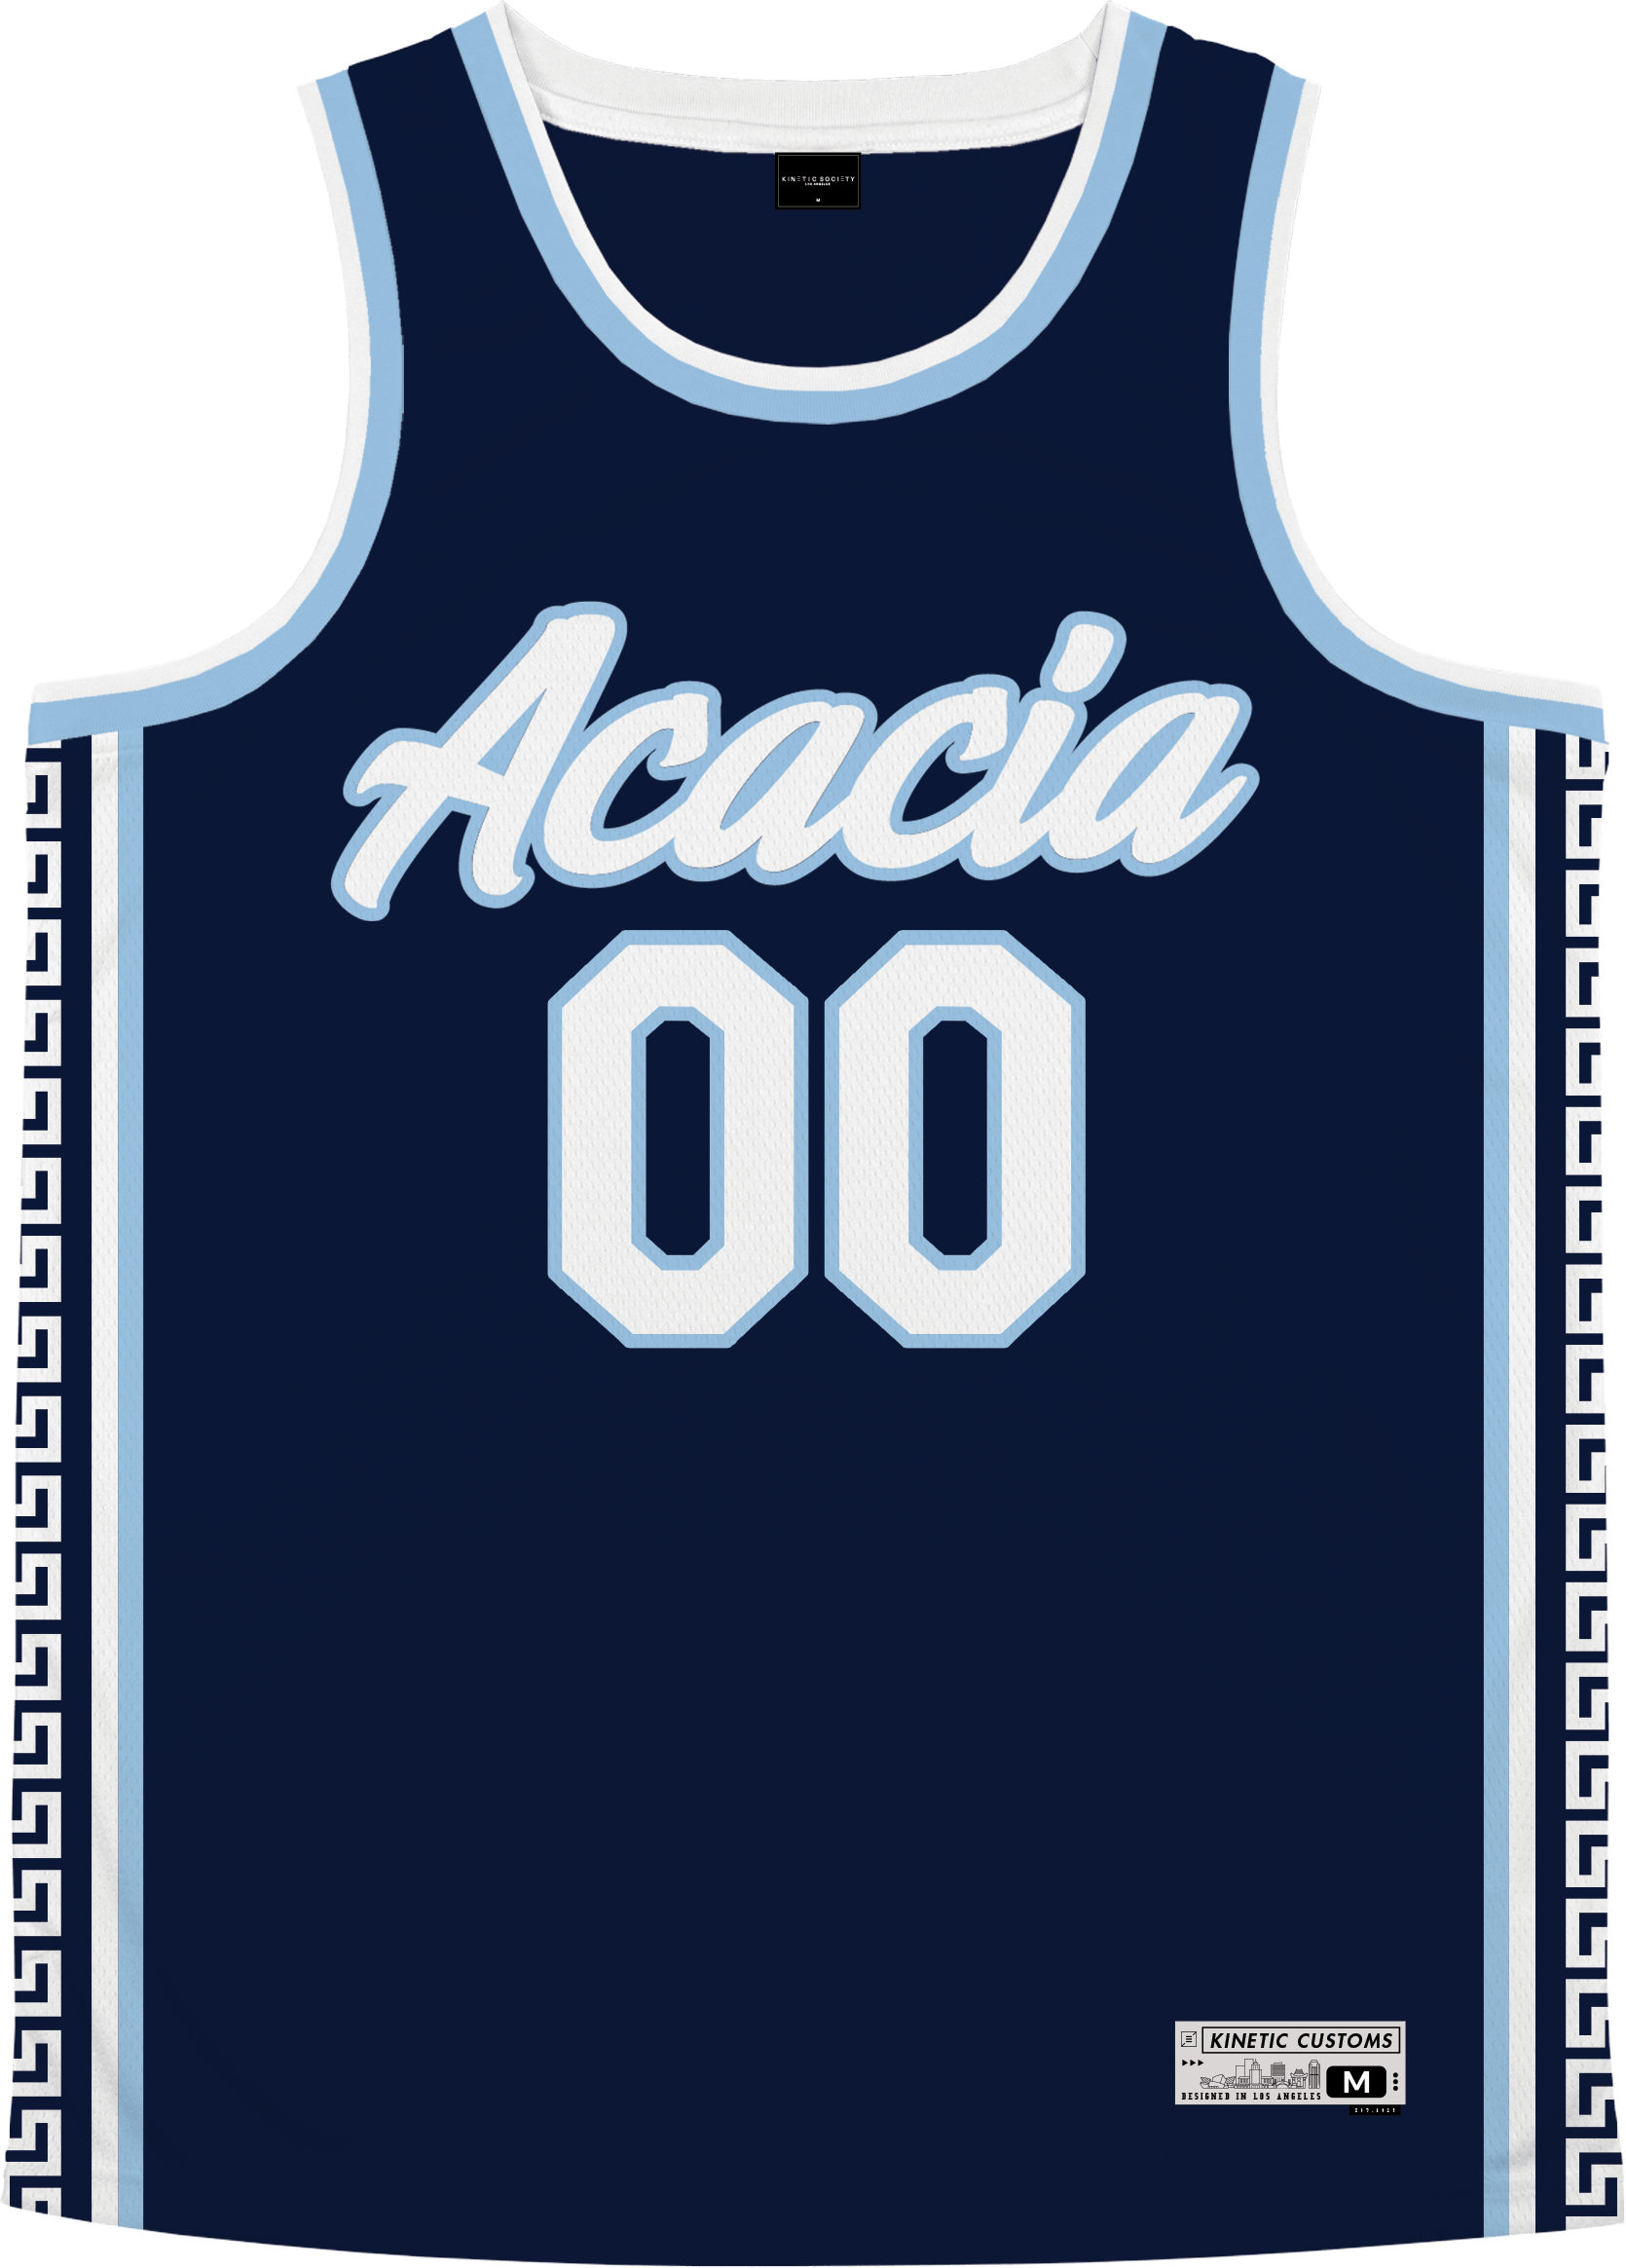 Acacia - Templar Basketball Jersey - Kinetic Society